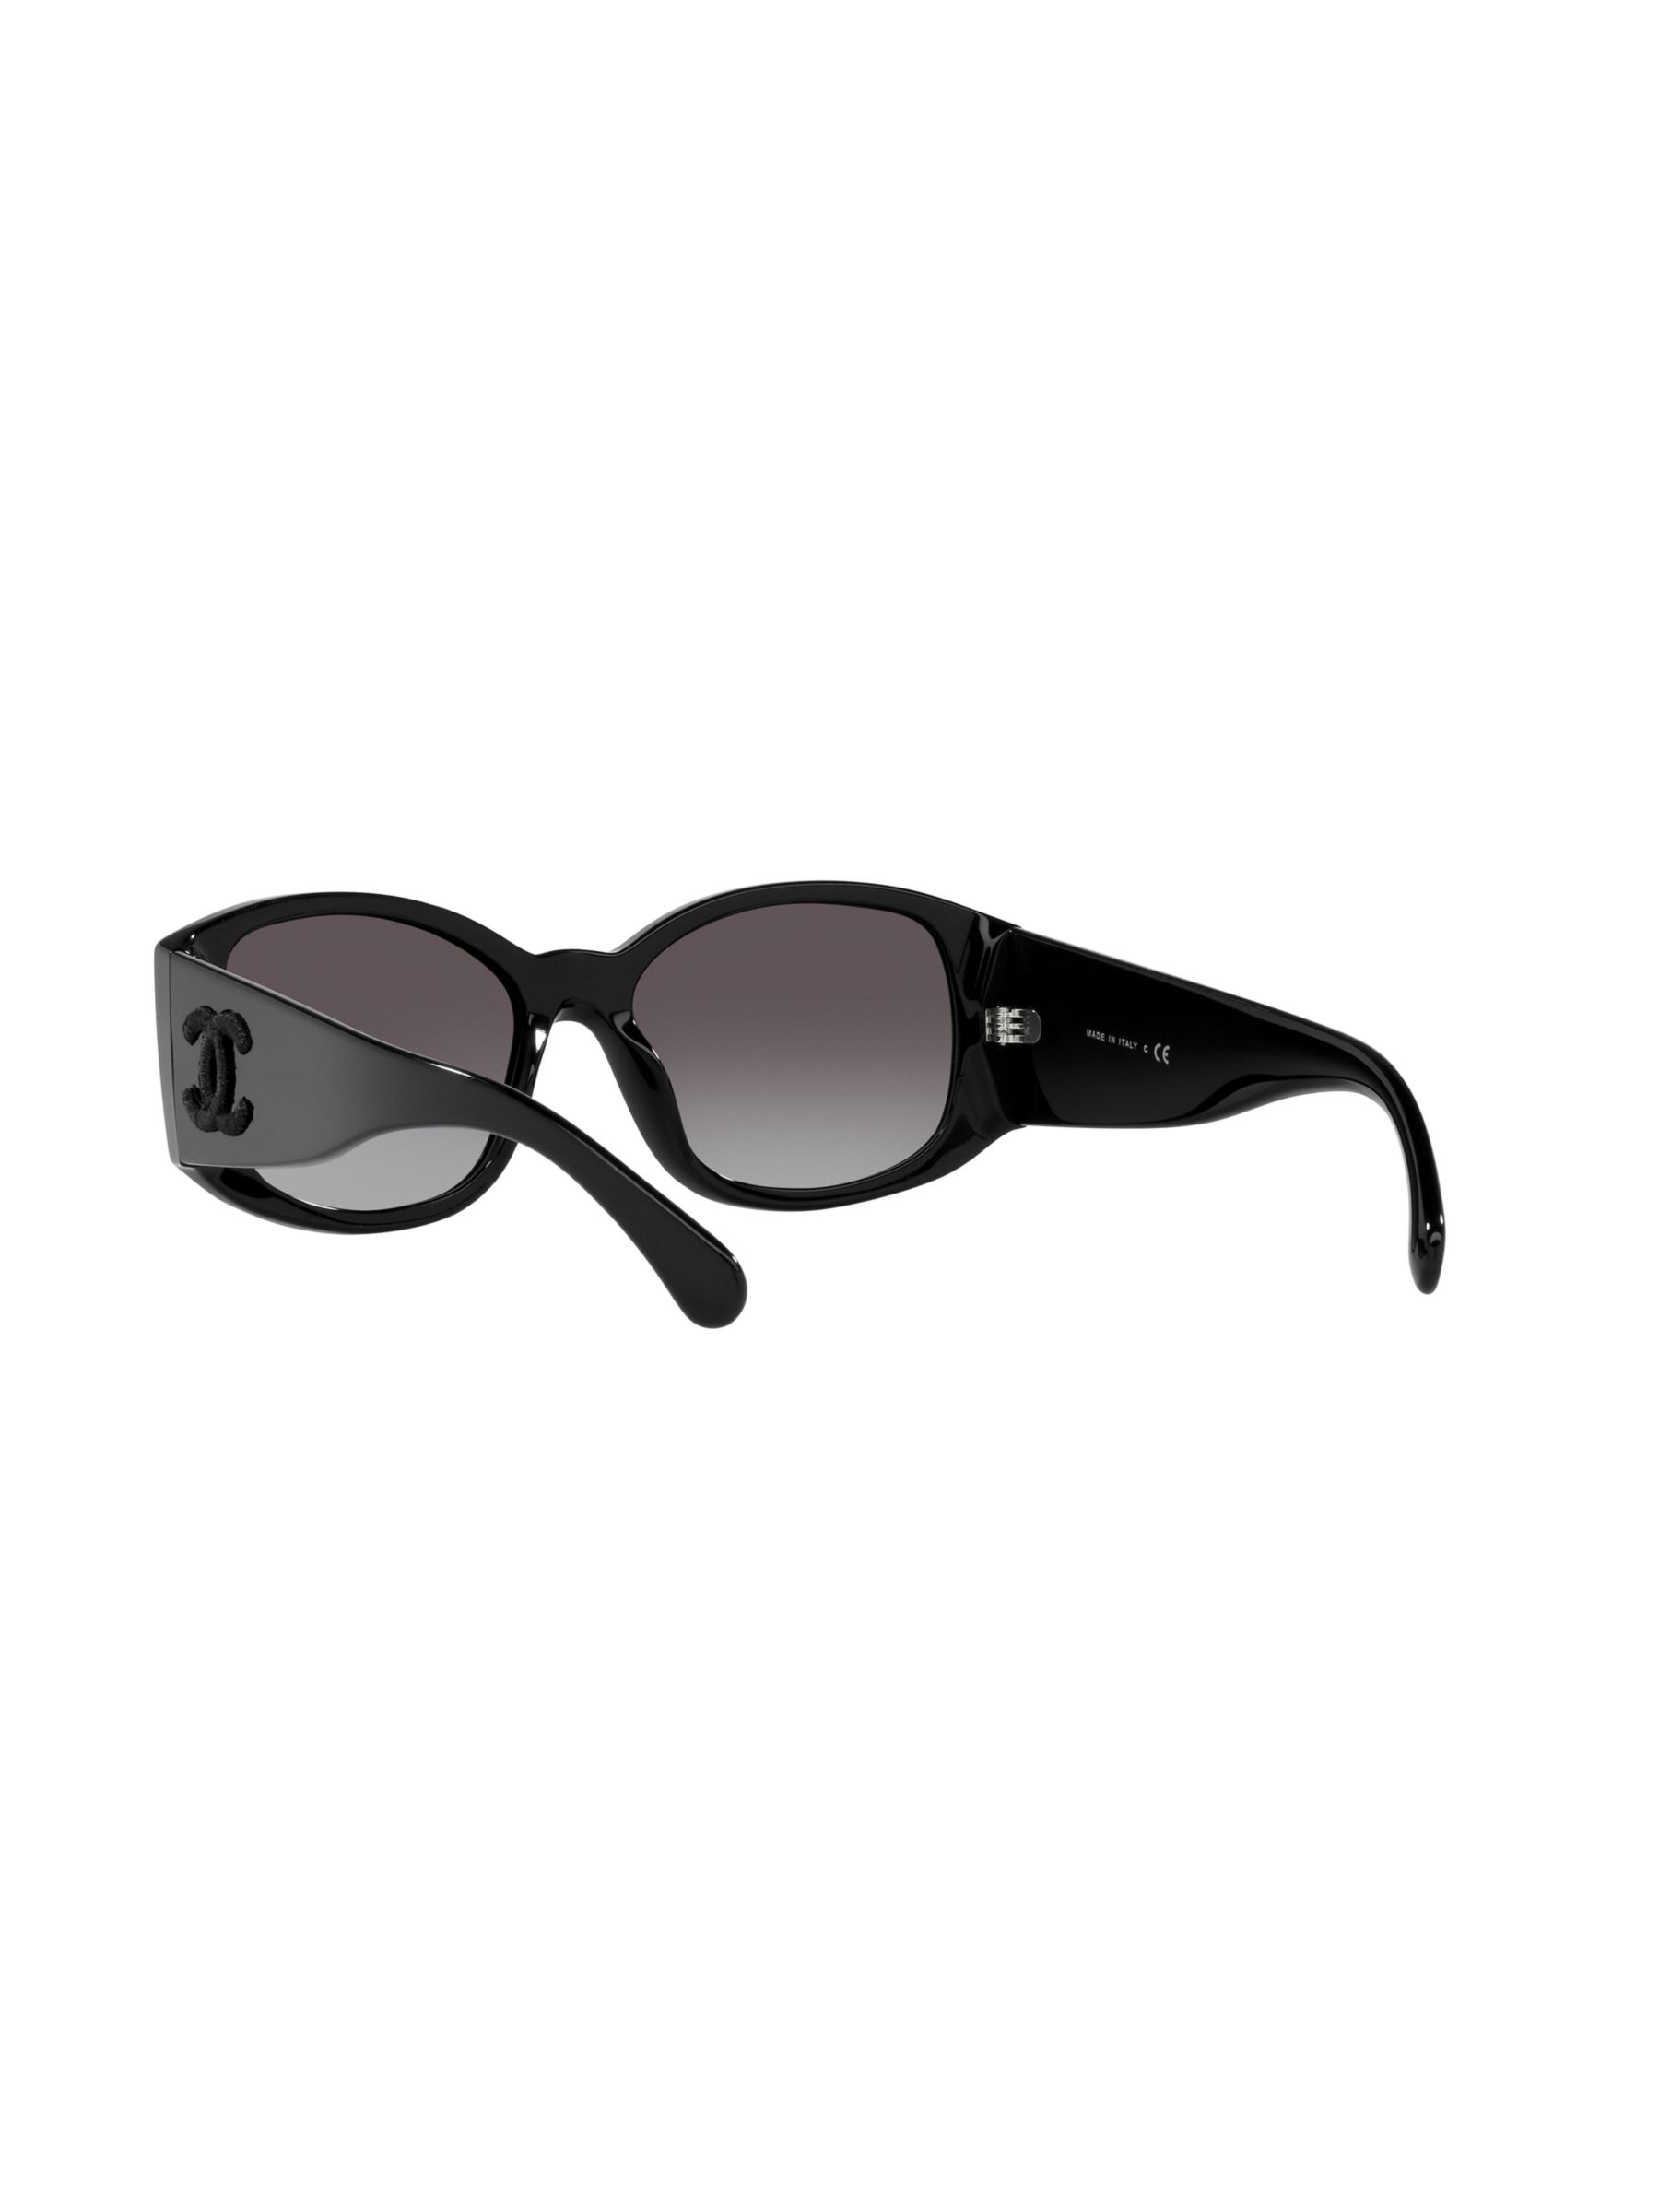 Buy CHANEL CH5450 Women's Irregular Sunglasses Online at johnlewis.com